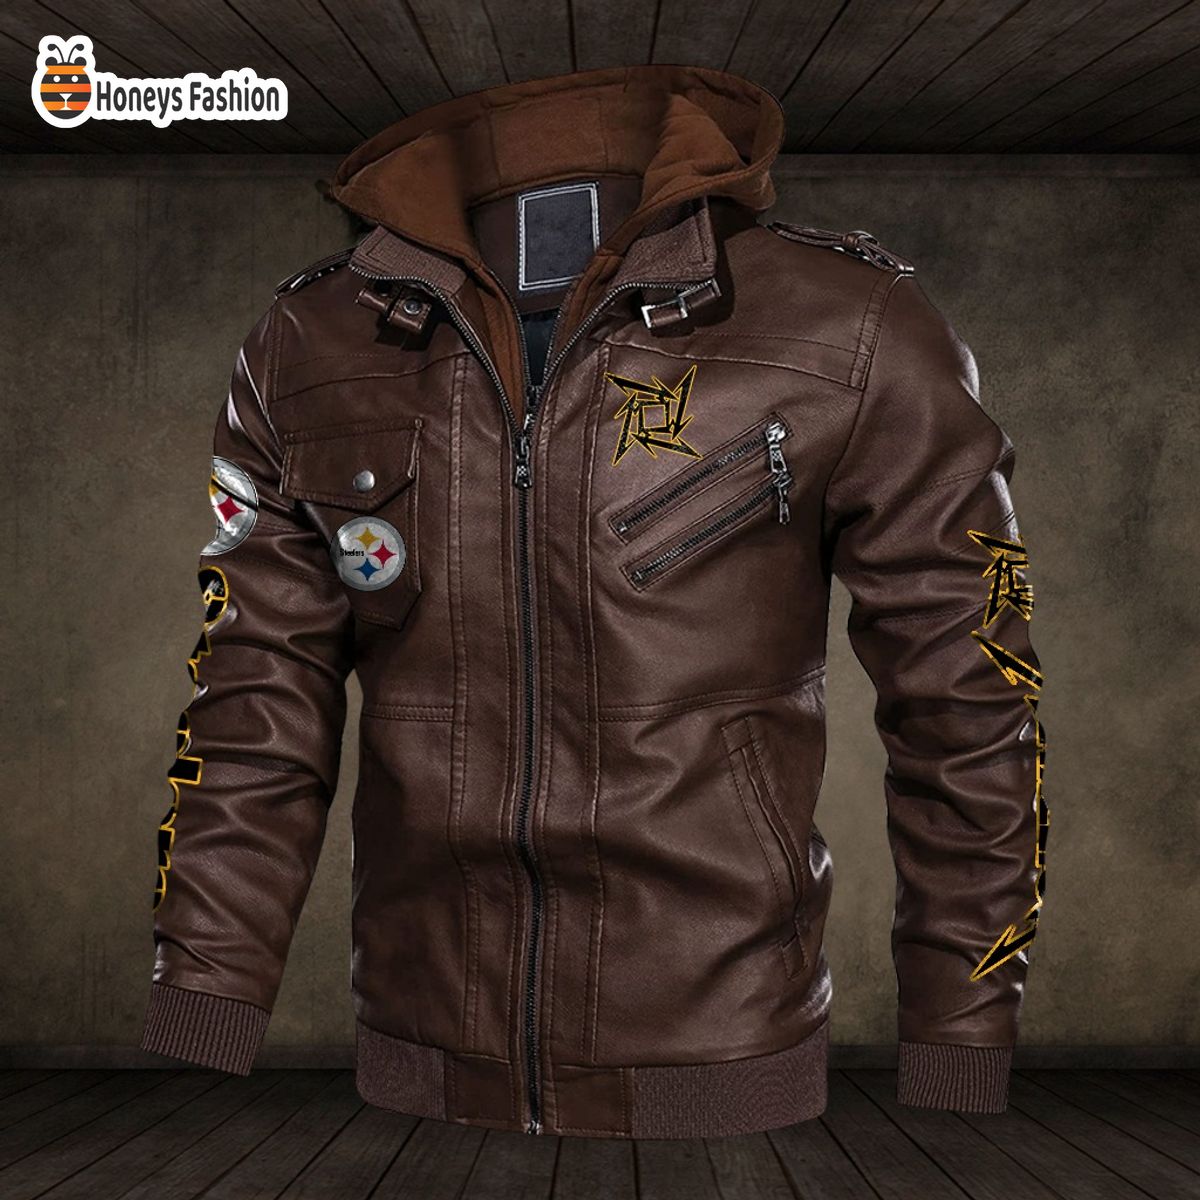 Pittsburgh Steelers NFL Metallica 2D PU Leather Jacket